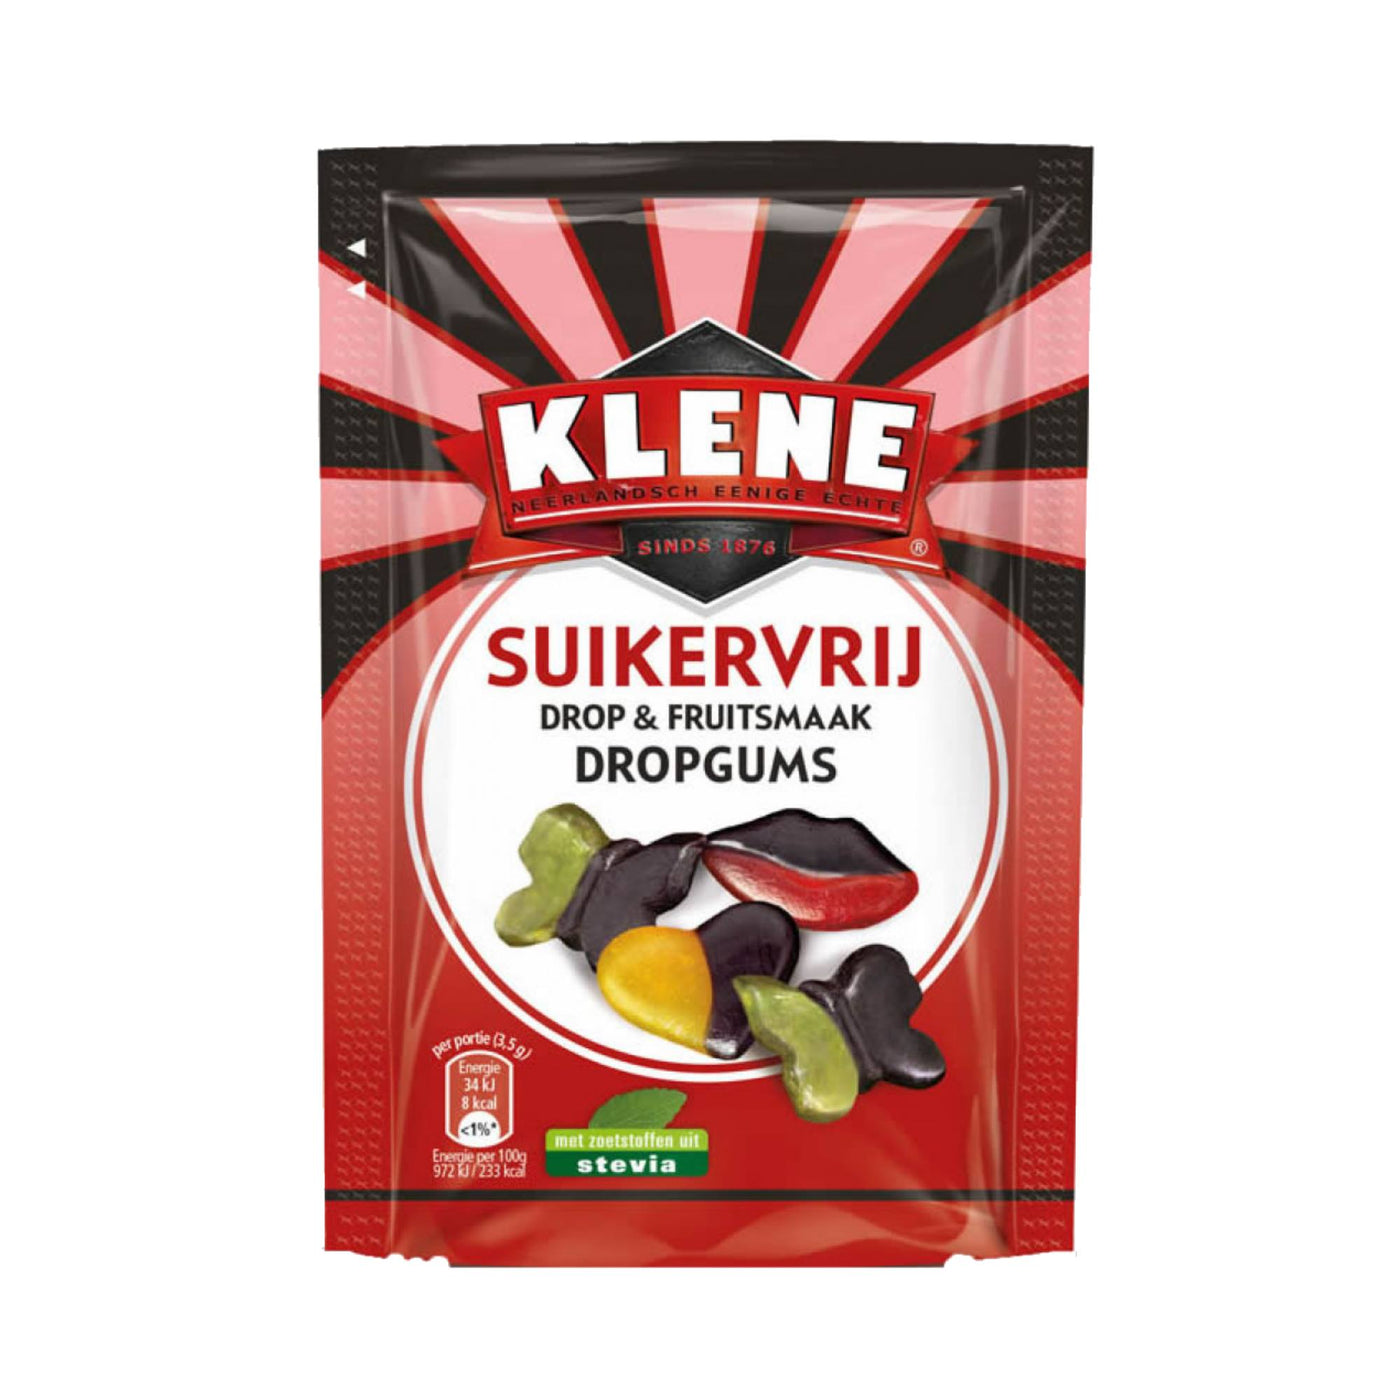 Klene Dropgums - Sugar Free Liquorice Fruit Gums